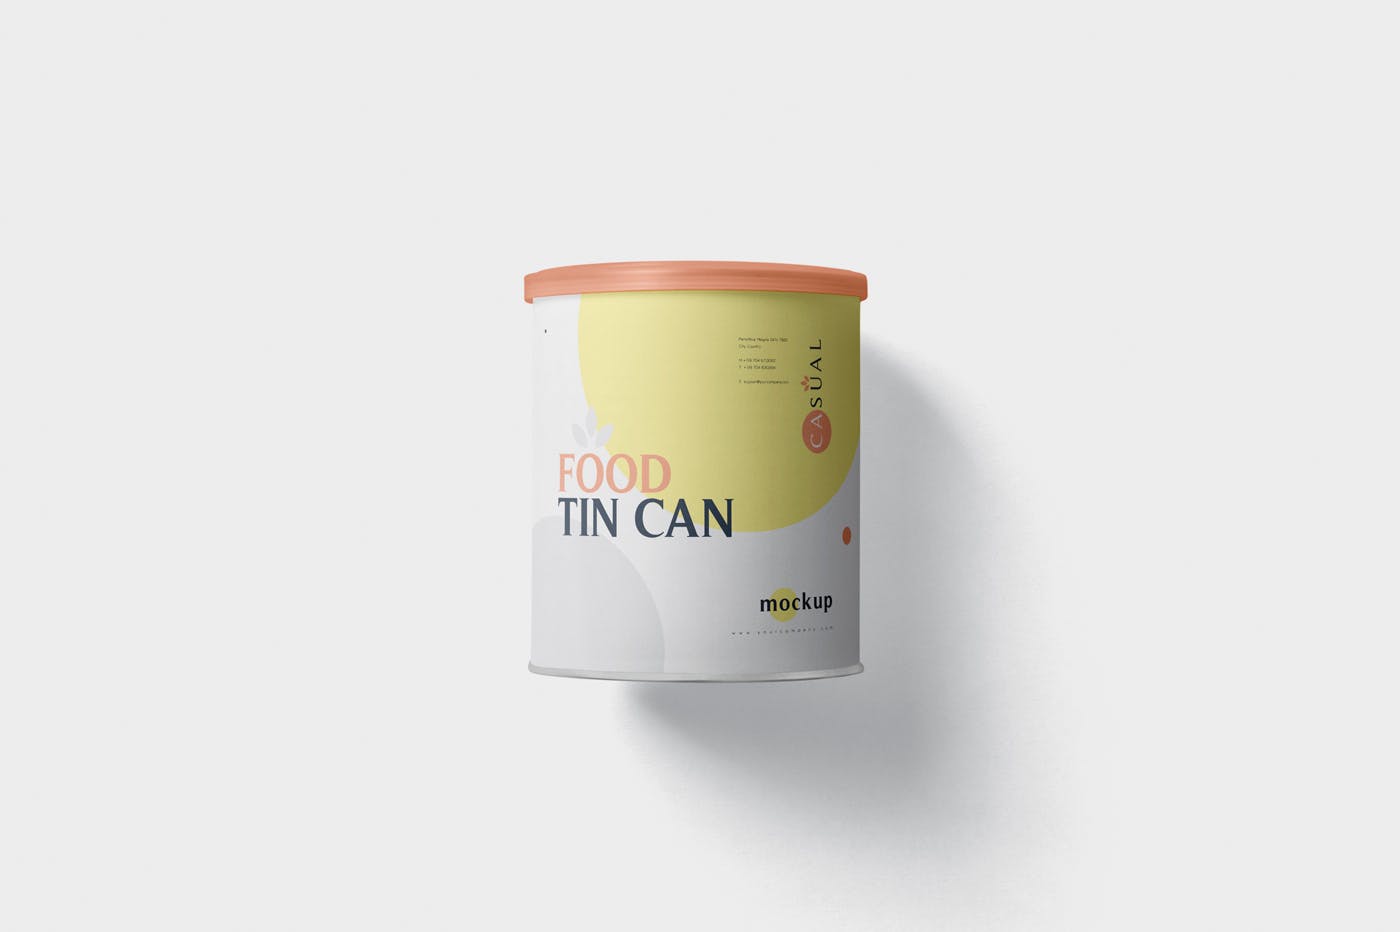 中型食物罐头外观设计样机模板 Food Tin Can Mockup Medium Size – Round插图(2)